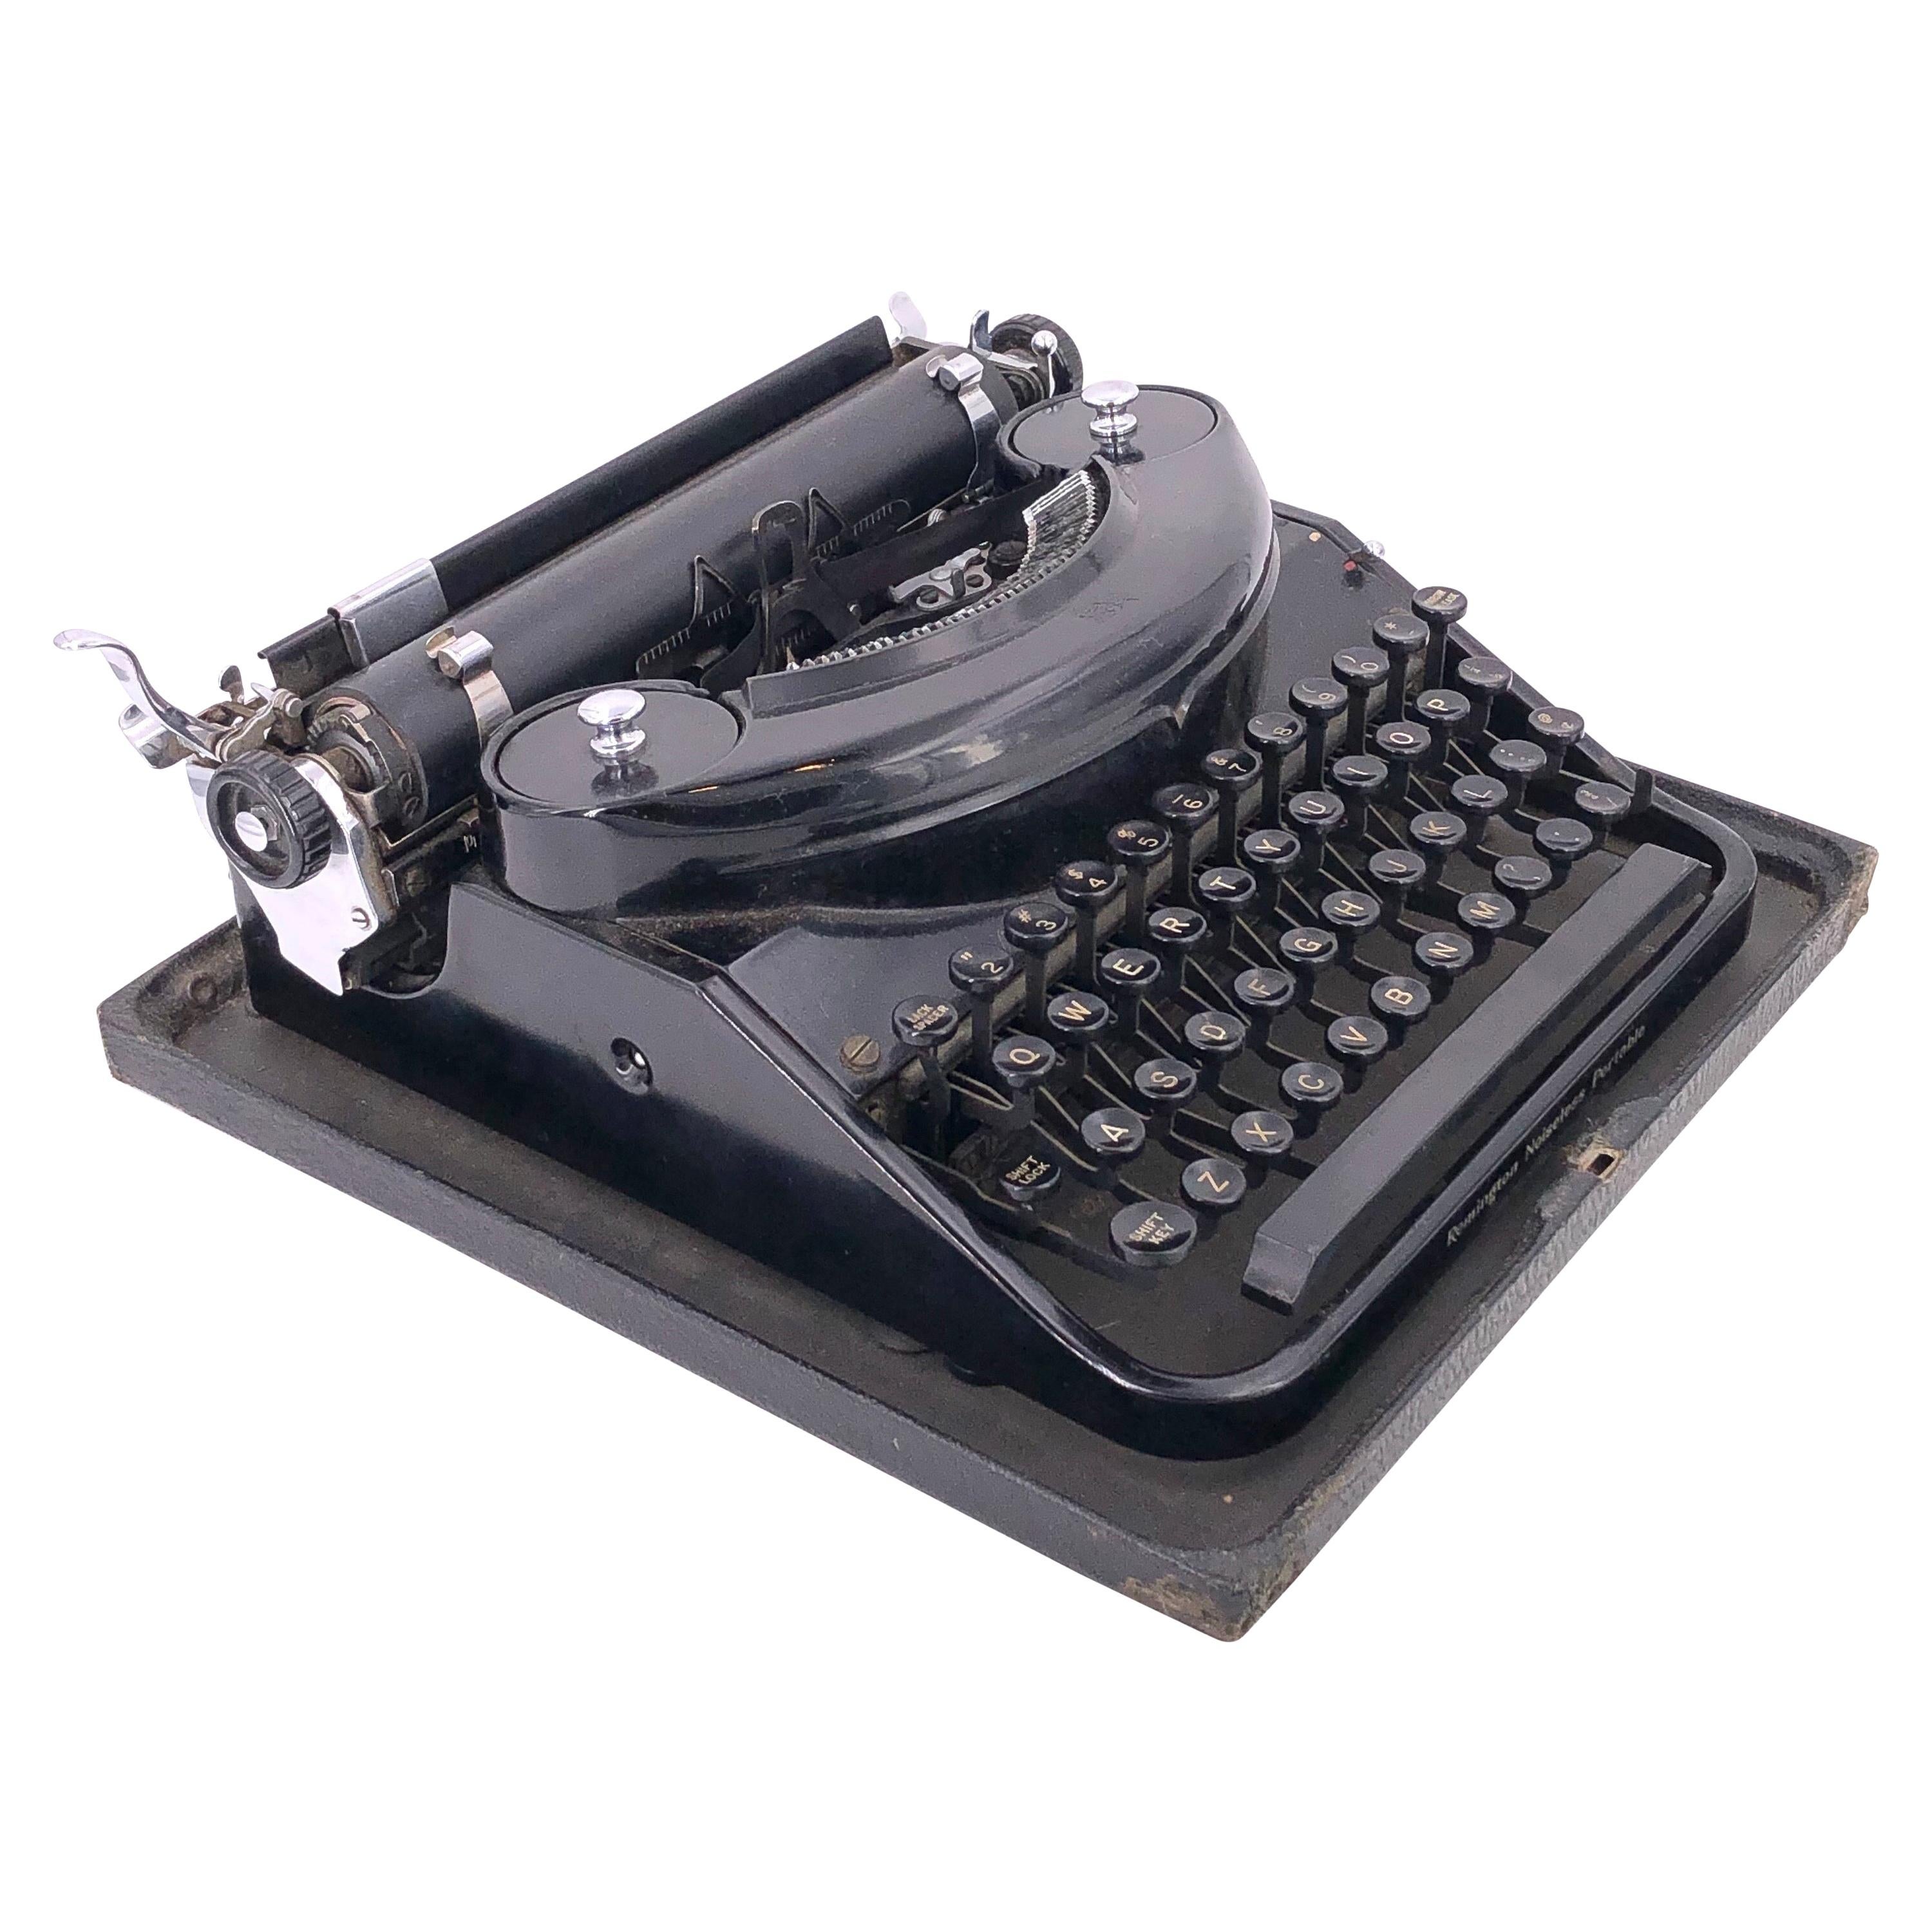 Antique Remington Noiseless Portable Typewriter